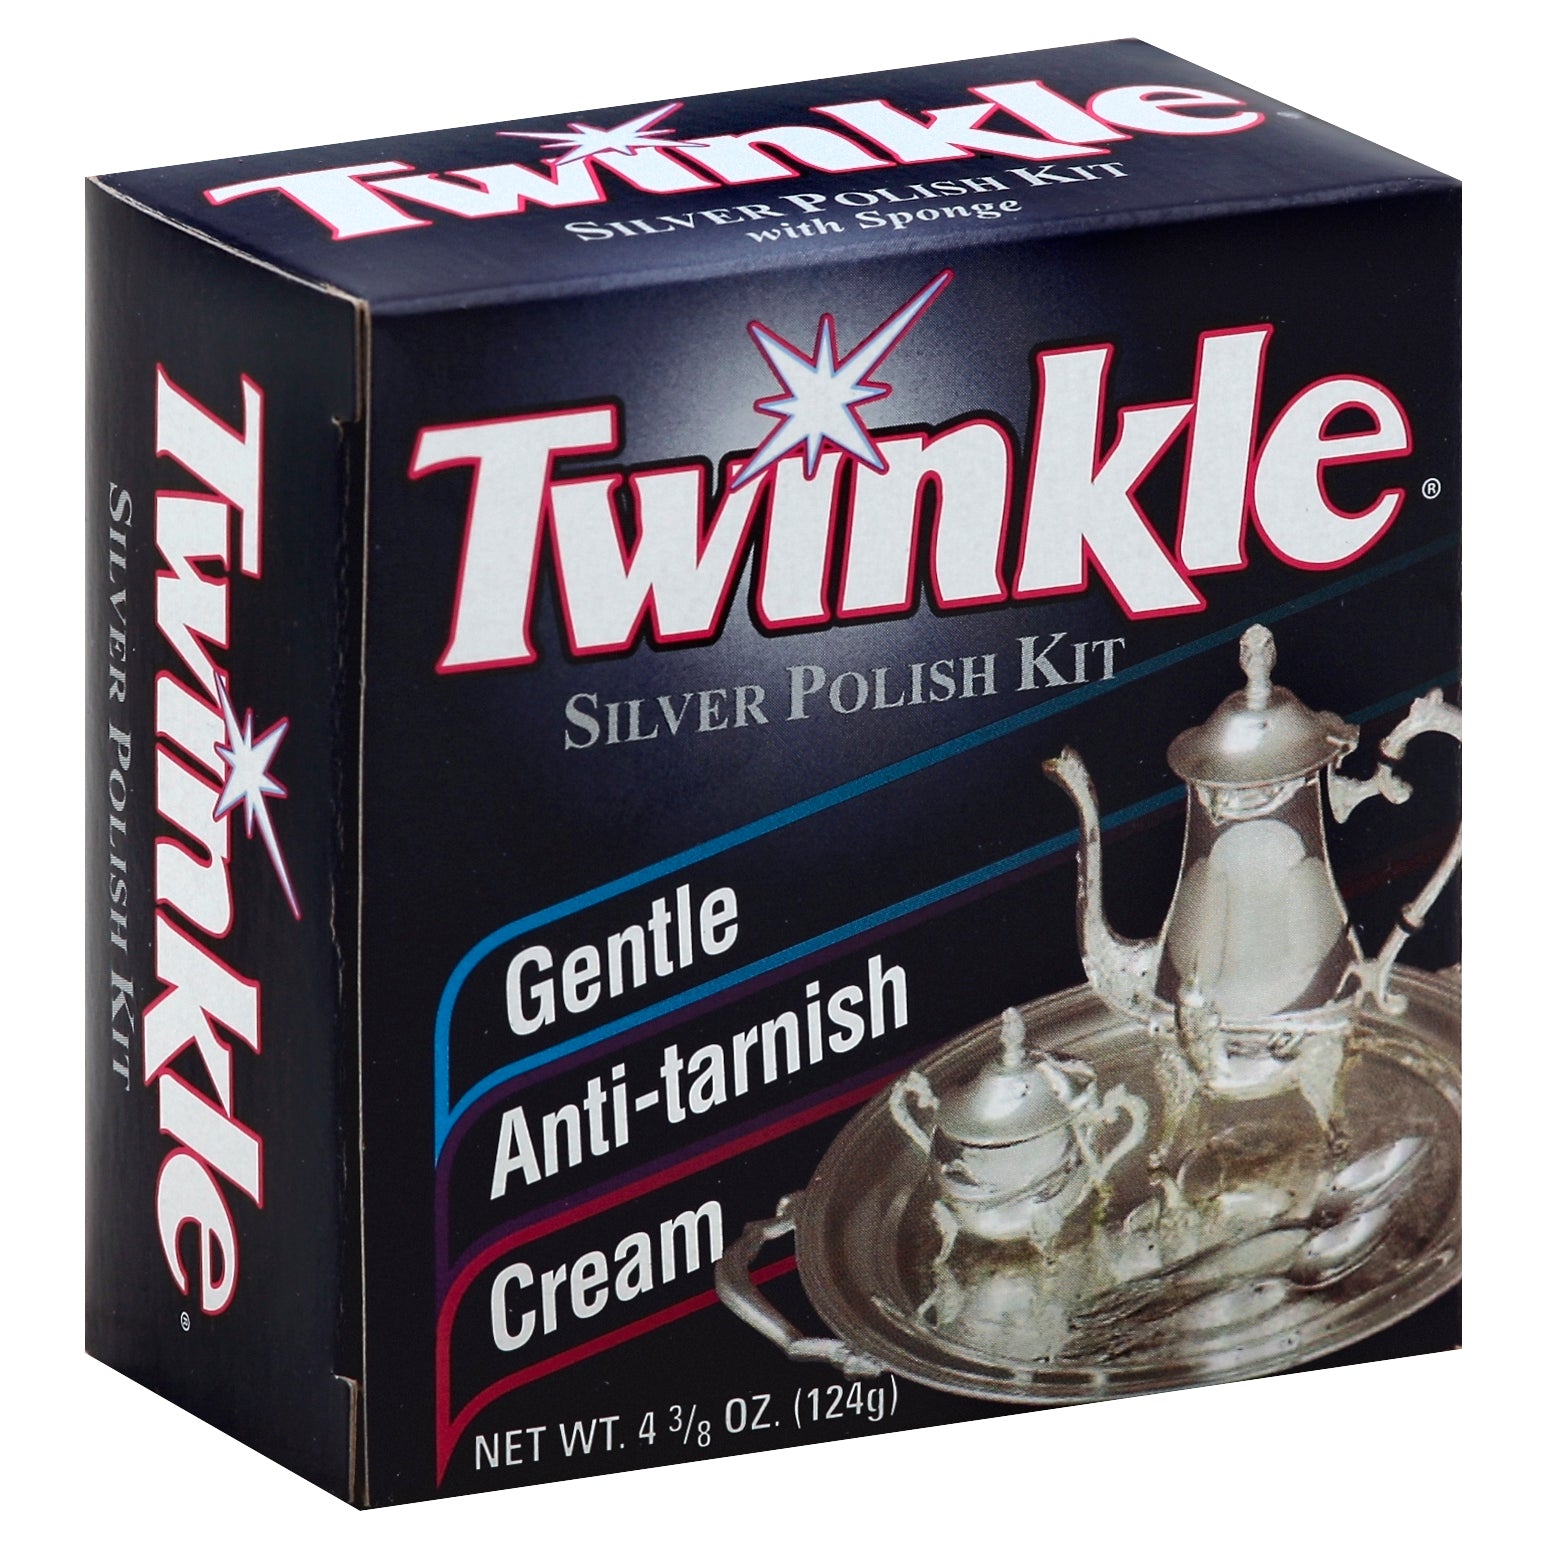 Twinkle Silver Polish Kit (12 pack)